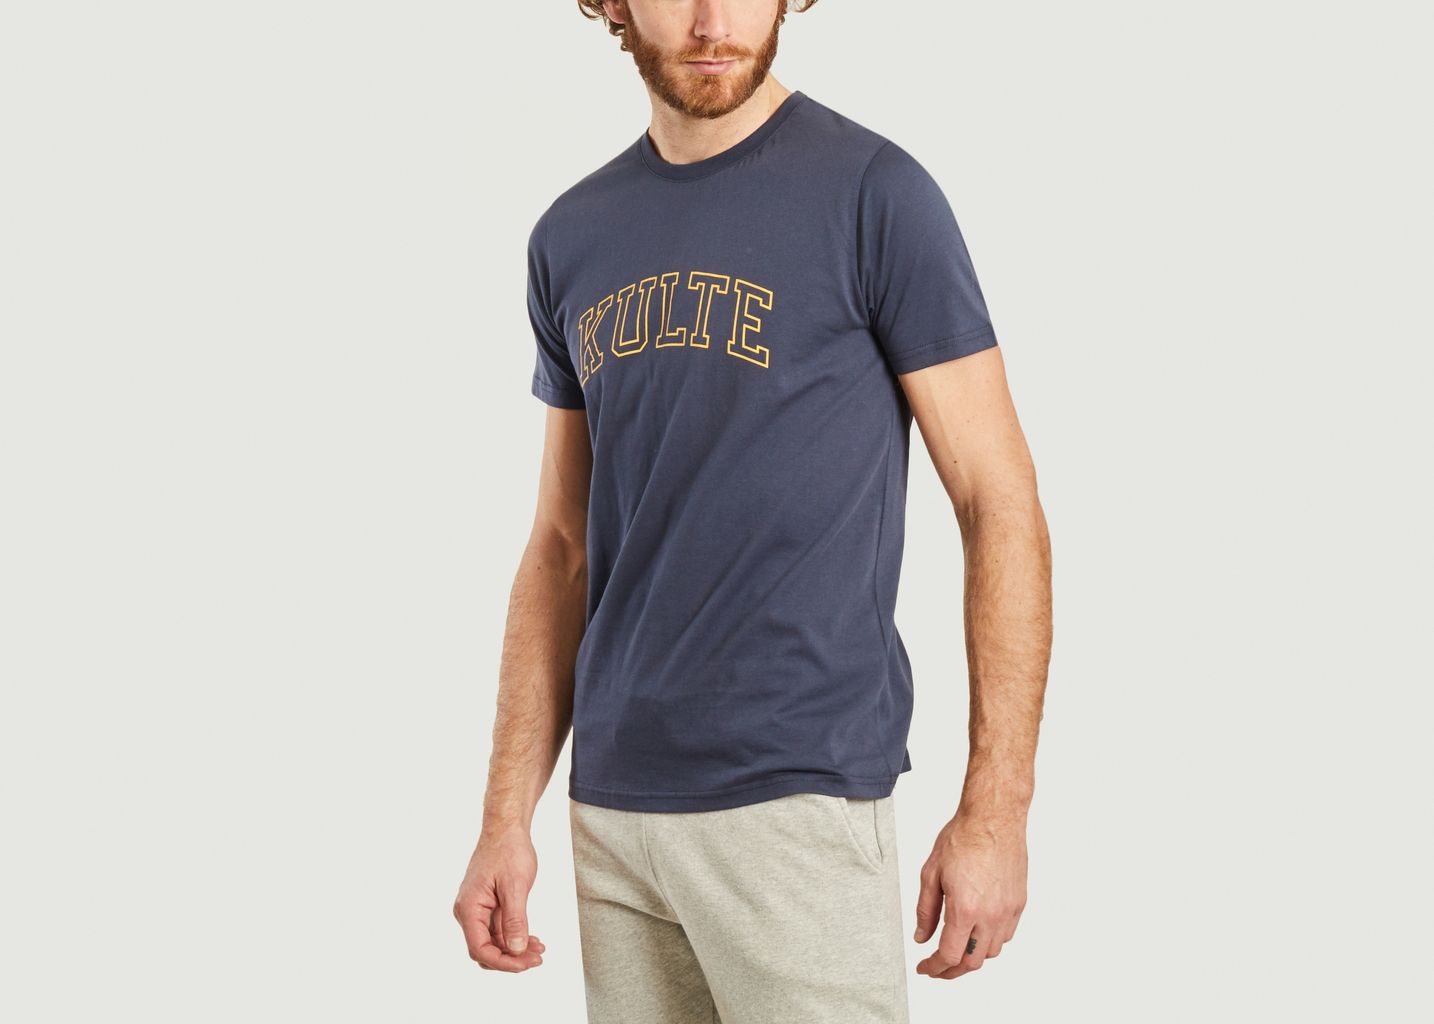 T-shirt Corpo Athletic - Kulte